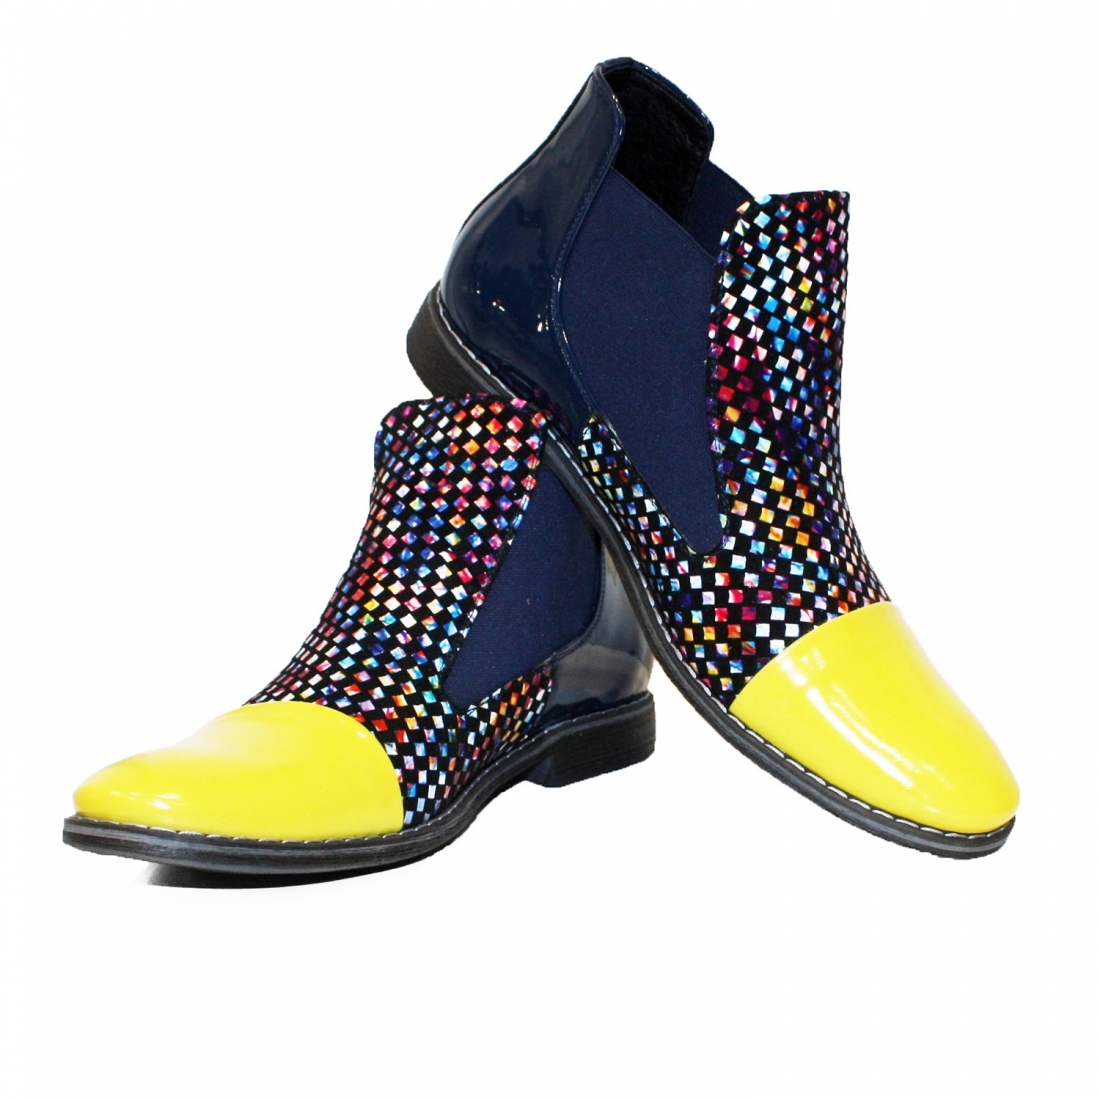 Modello Colorello - Chelsea Boots - Handmade Colorful Italian Leather Shoes